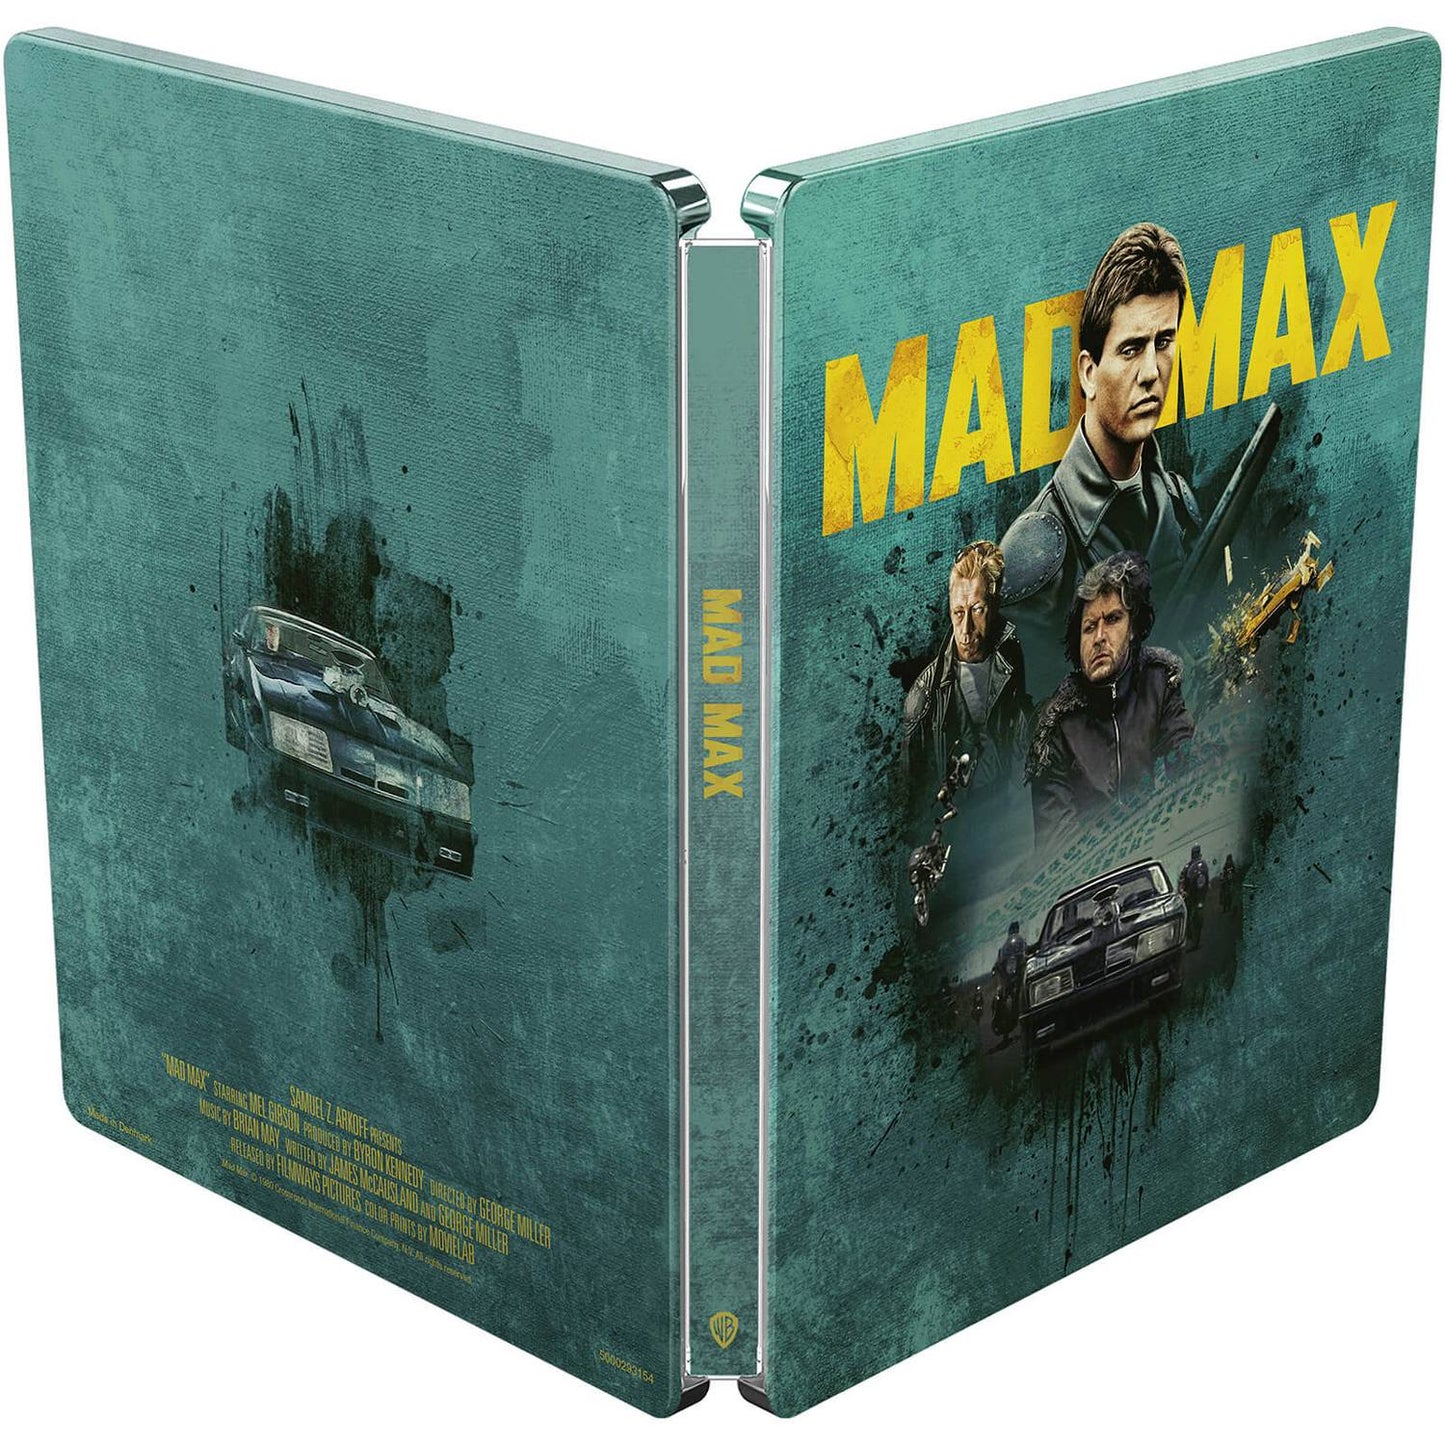 Безумный Макс (1979) (4K UHD + Blu-ray) Steelbook